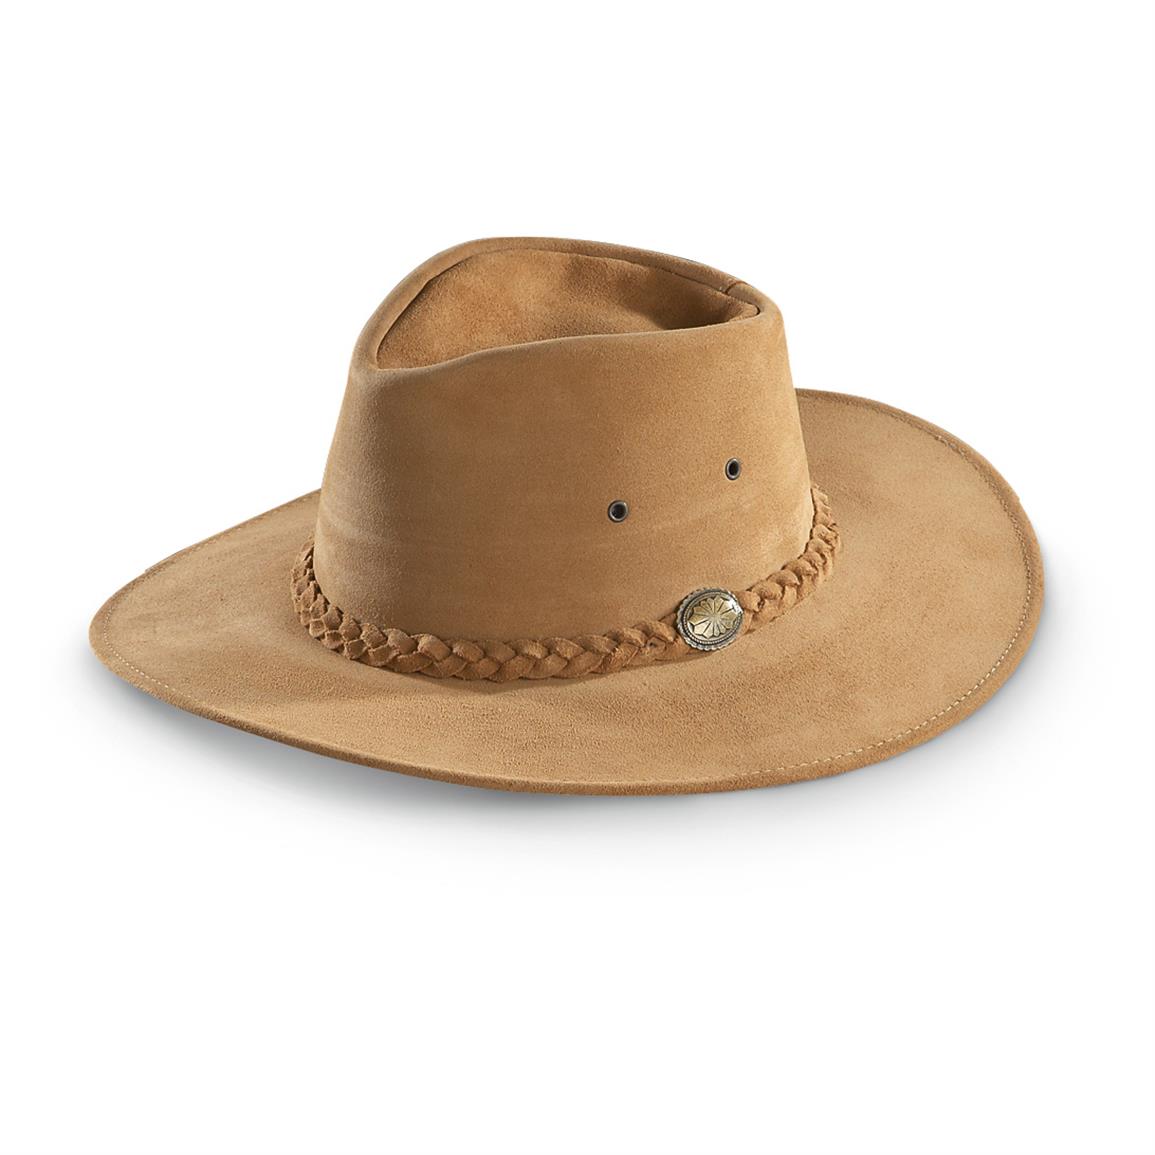 Henschel Crusher Cowboy Hat - 625217, Hats & Caps at Sportsman's Guide